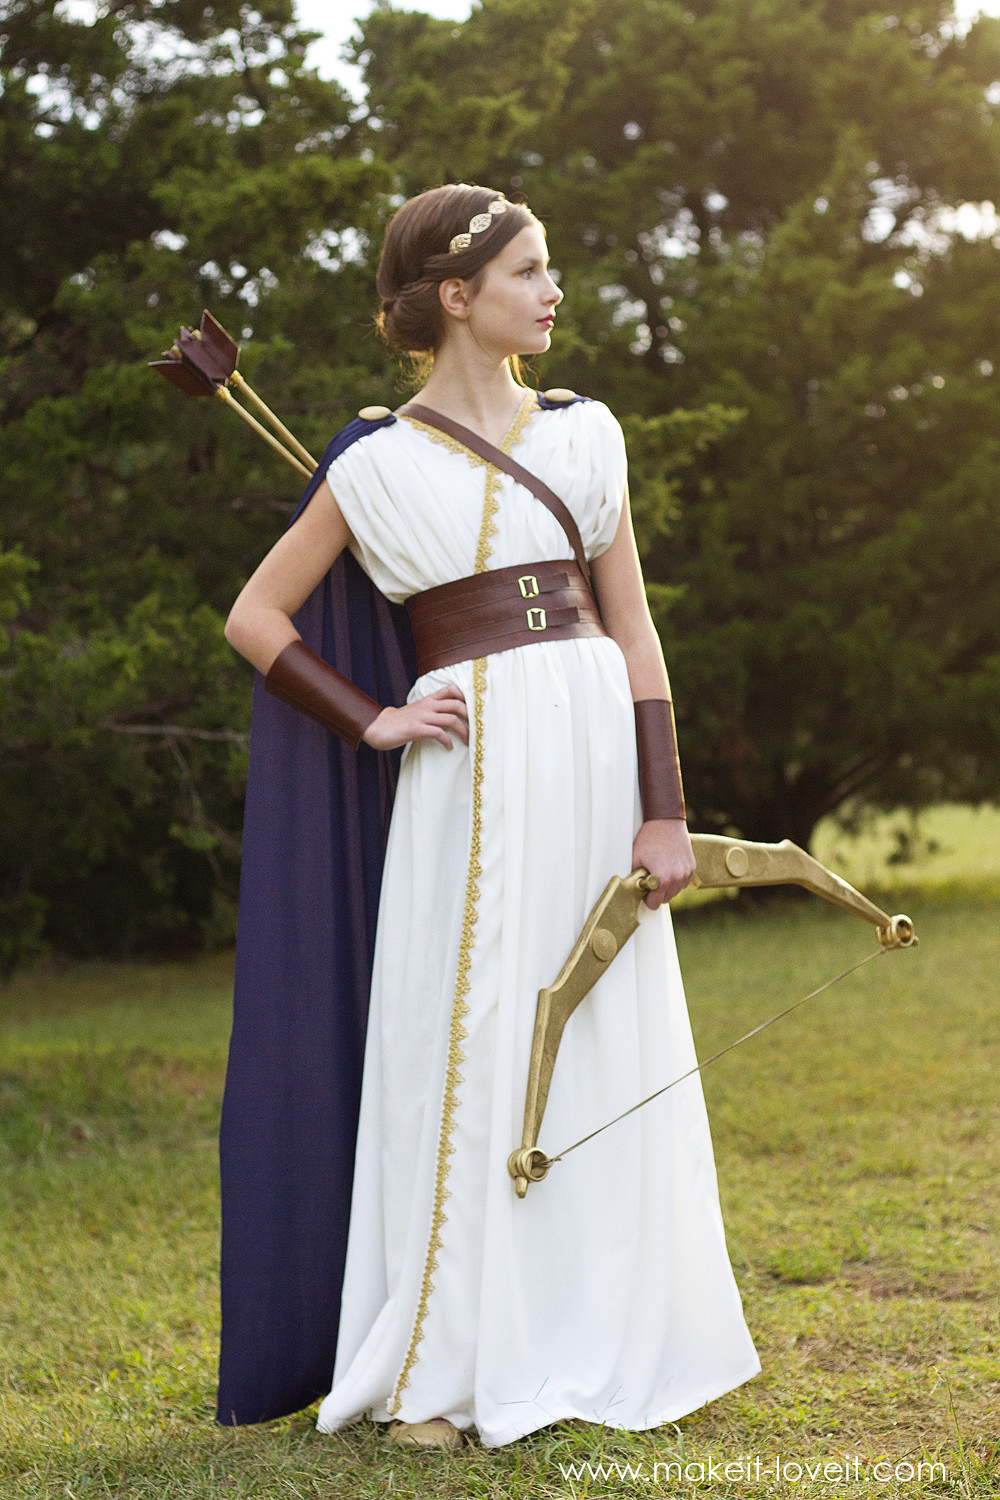 Best ideas about Greek Goddess Costume DIY
. Save or Pin DIY Greek Goddess Costume ARTEMIS Now.